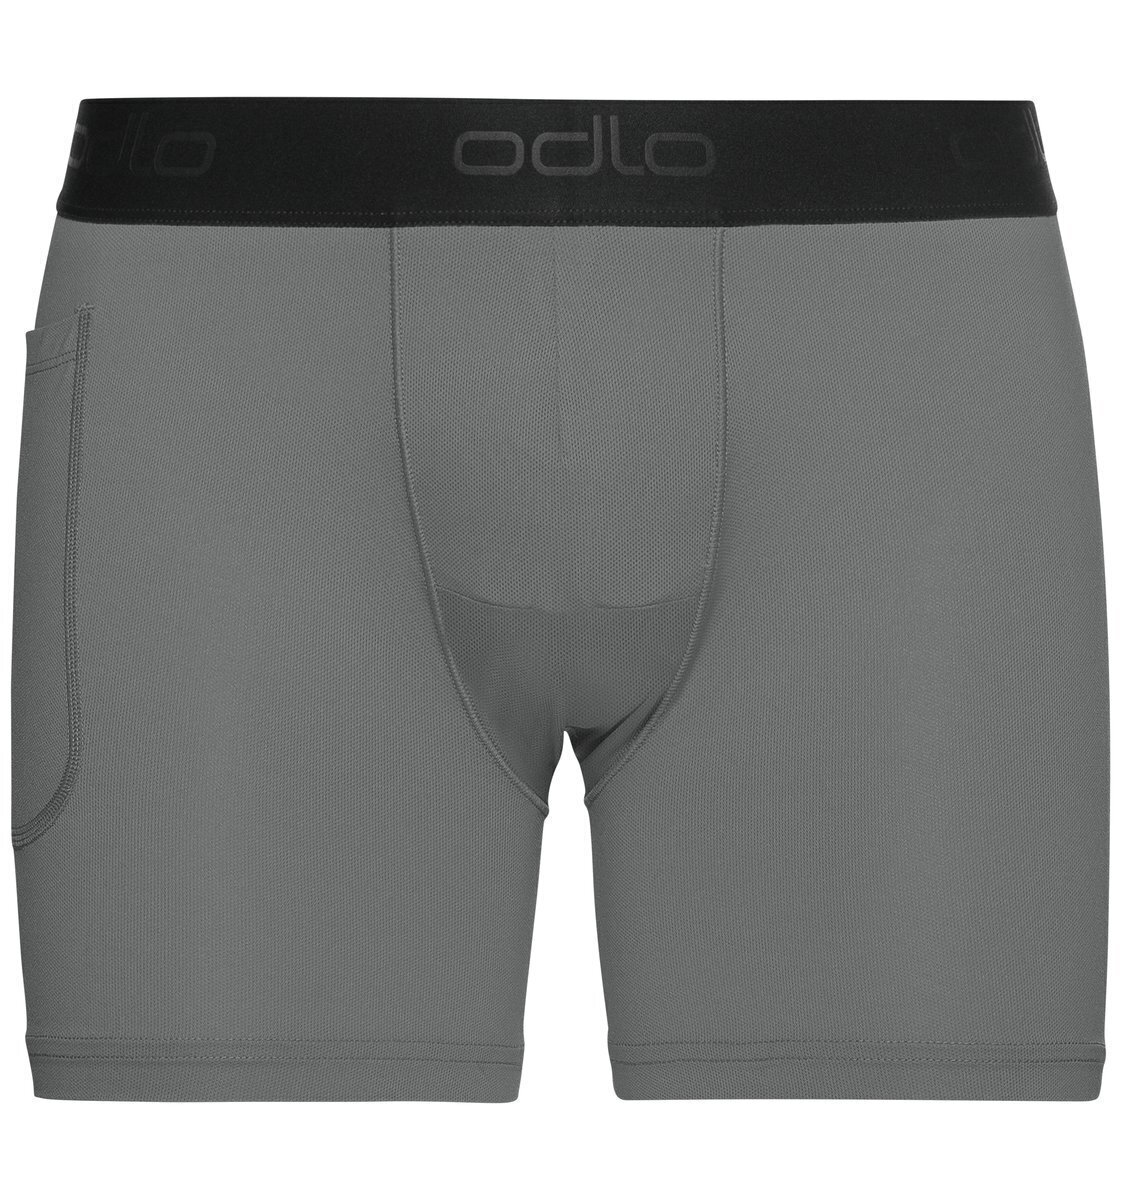 Juoksushortsit Odlo Active Sport Liner Shorts Steel Grey S Juoksushortsit